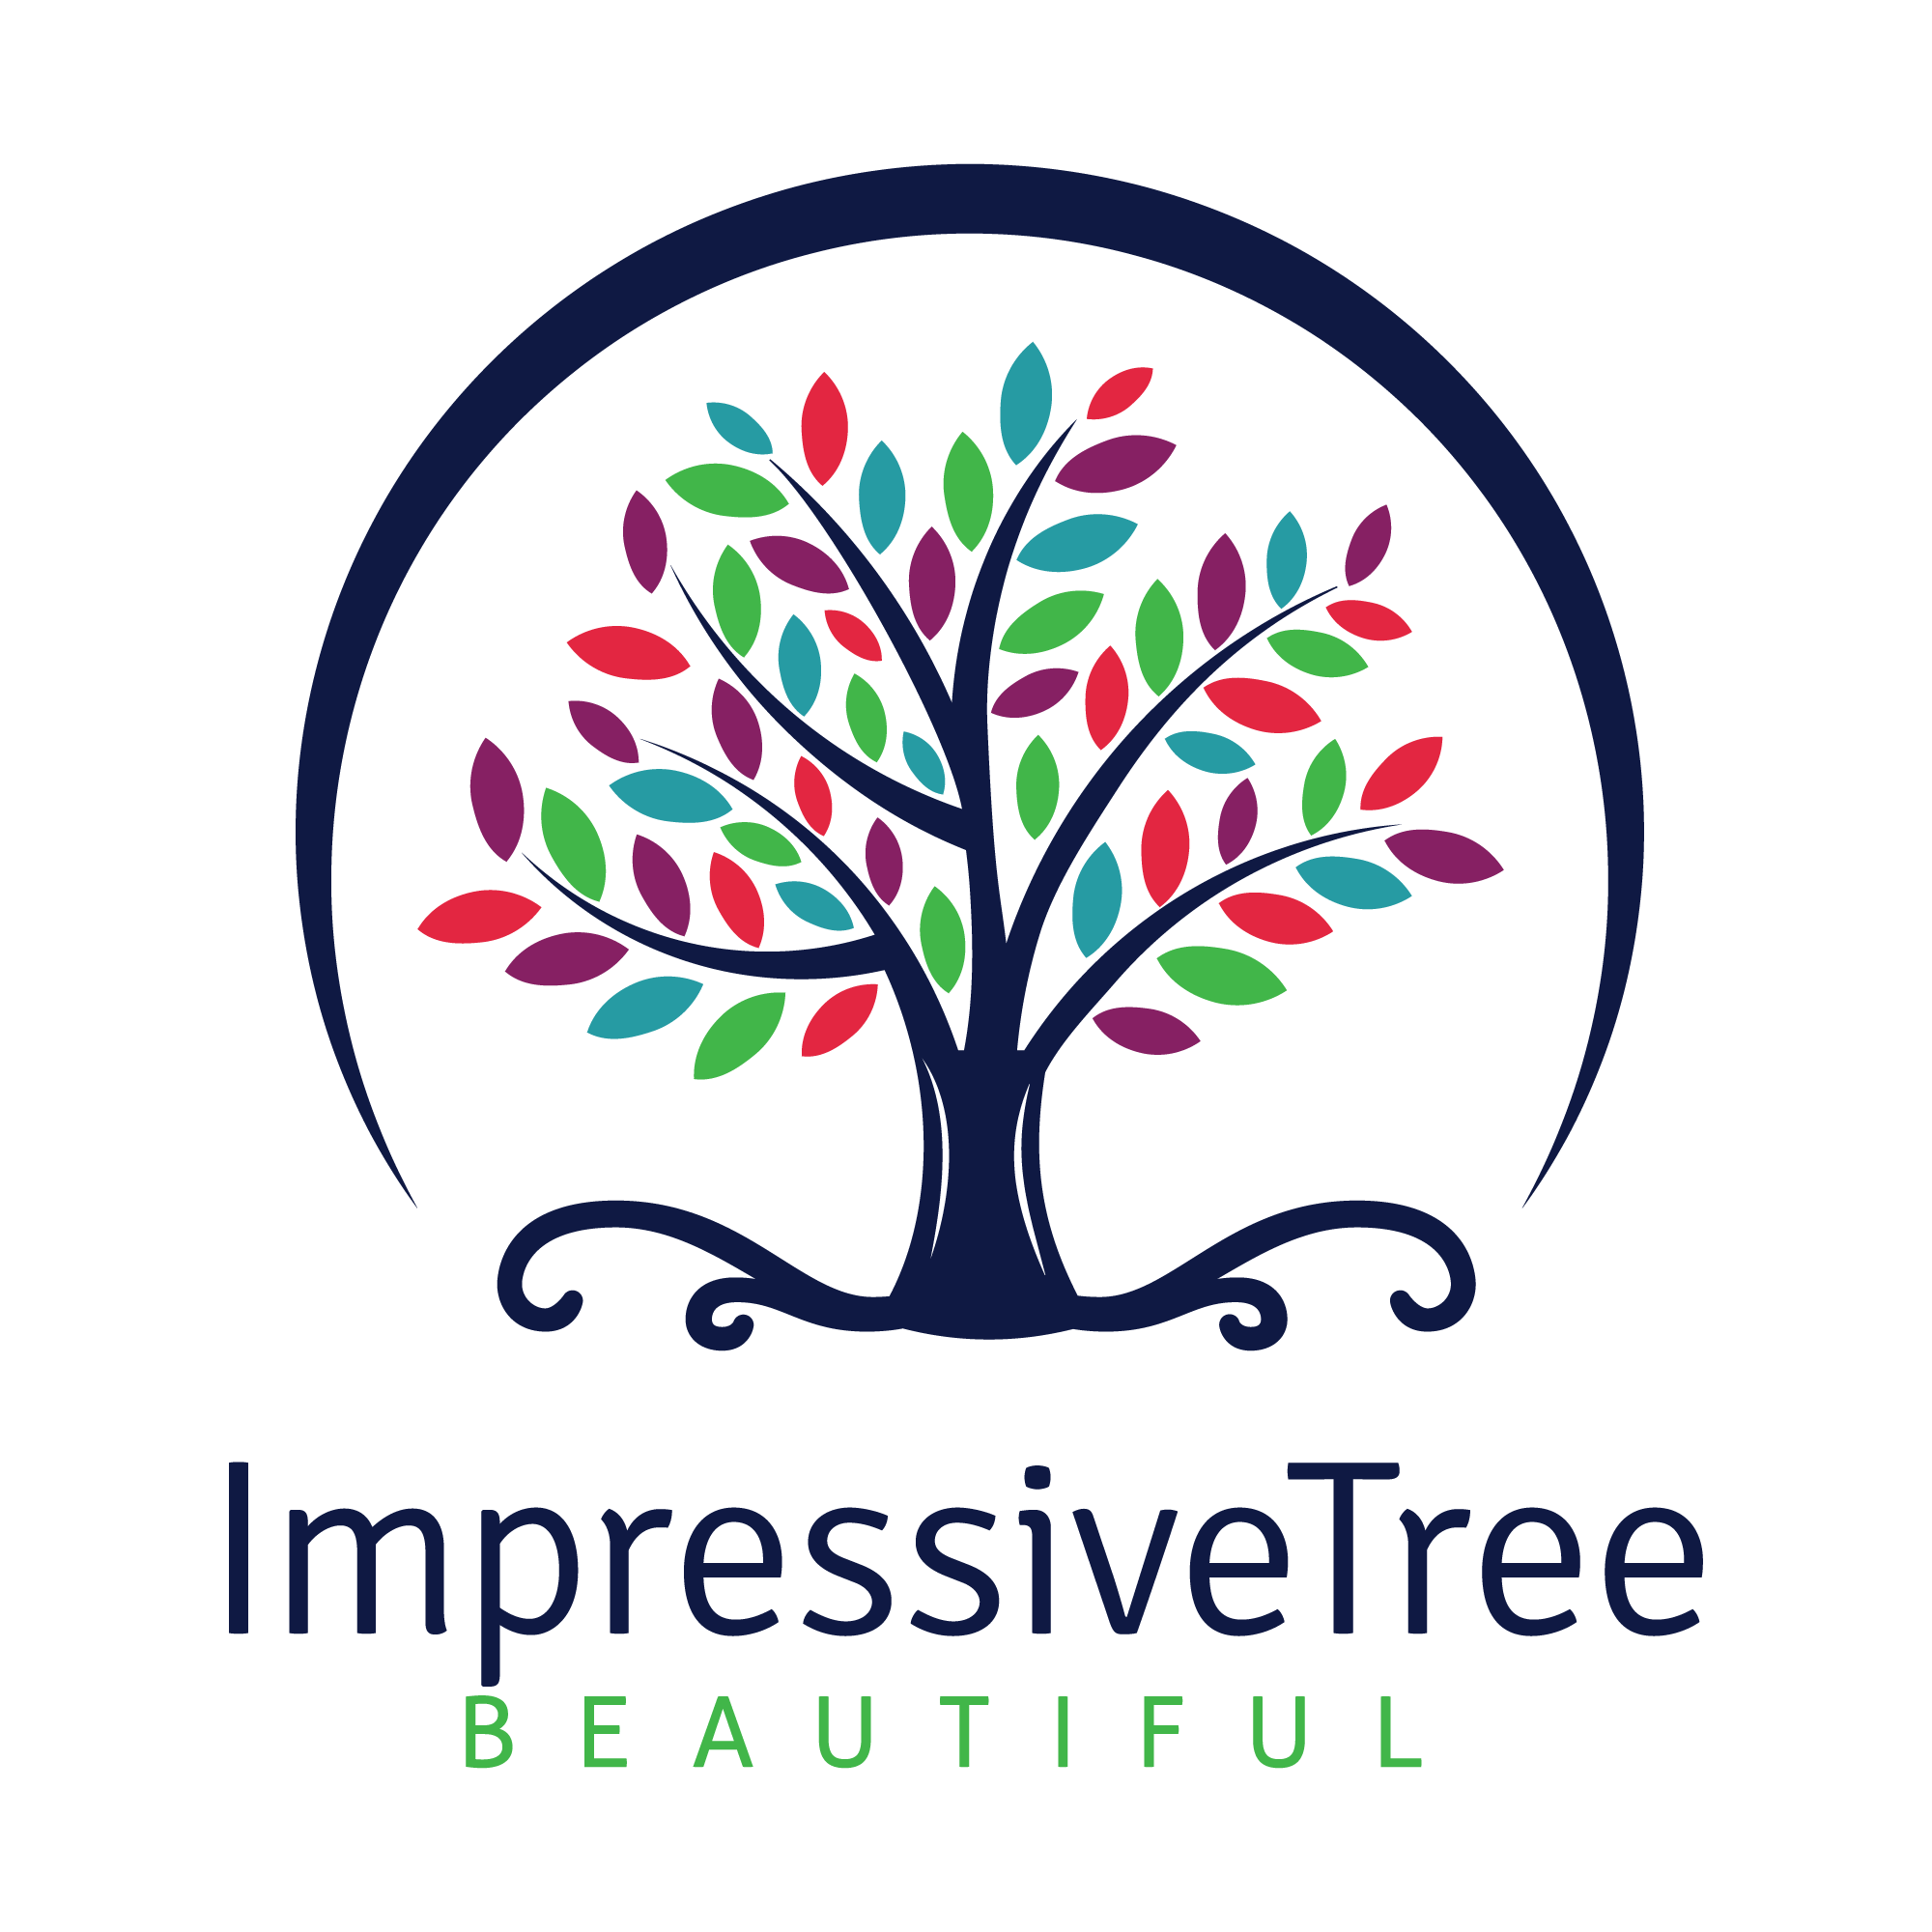 Logo colorful and joyful. Teamwork clipart tree